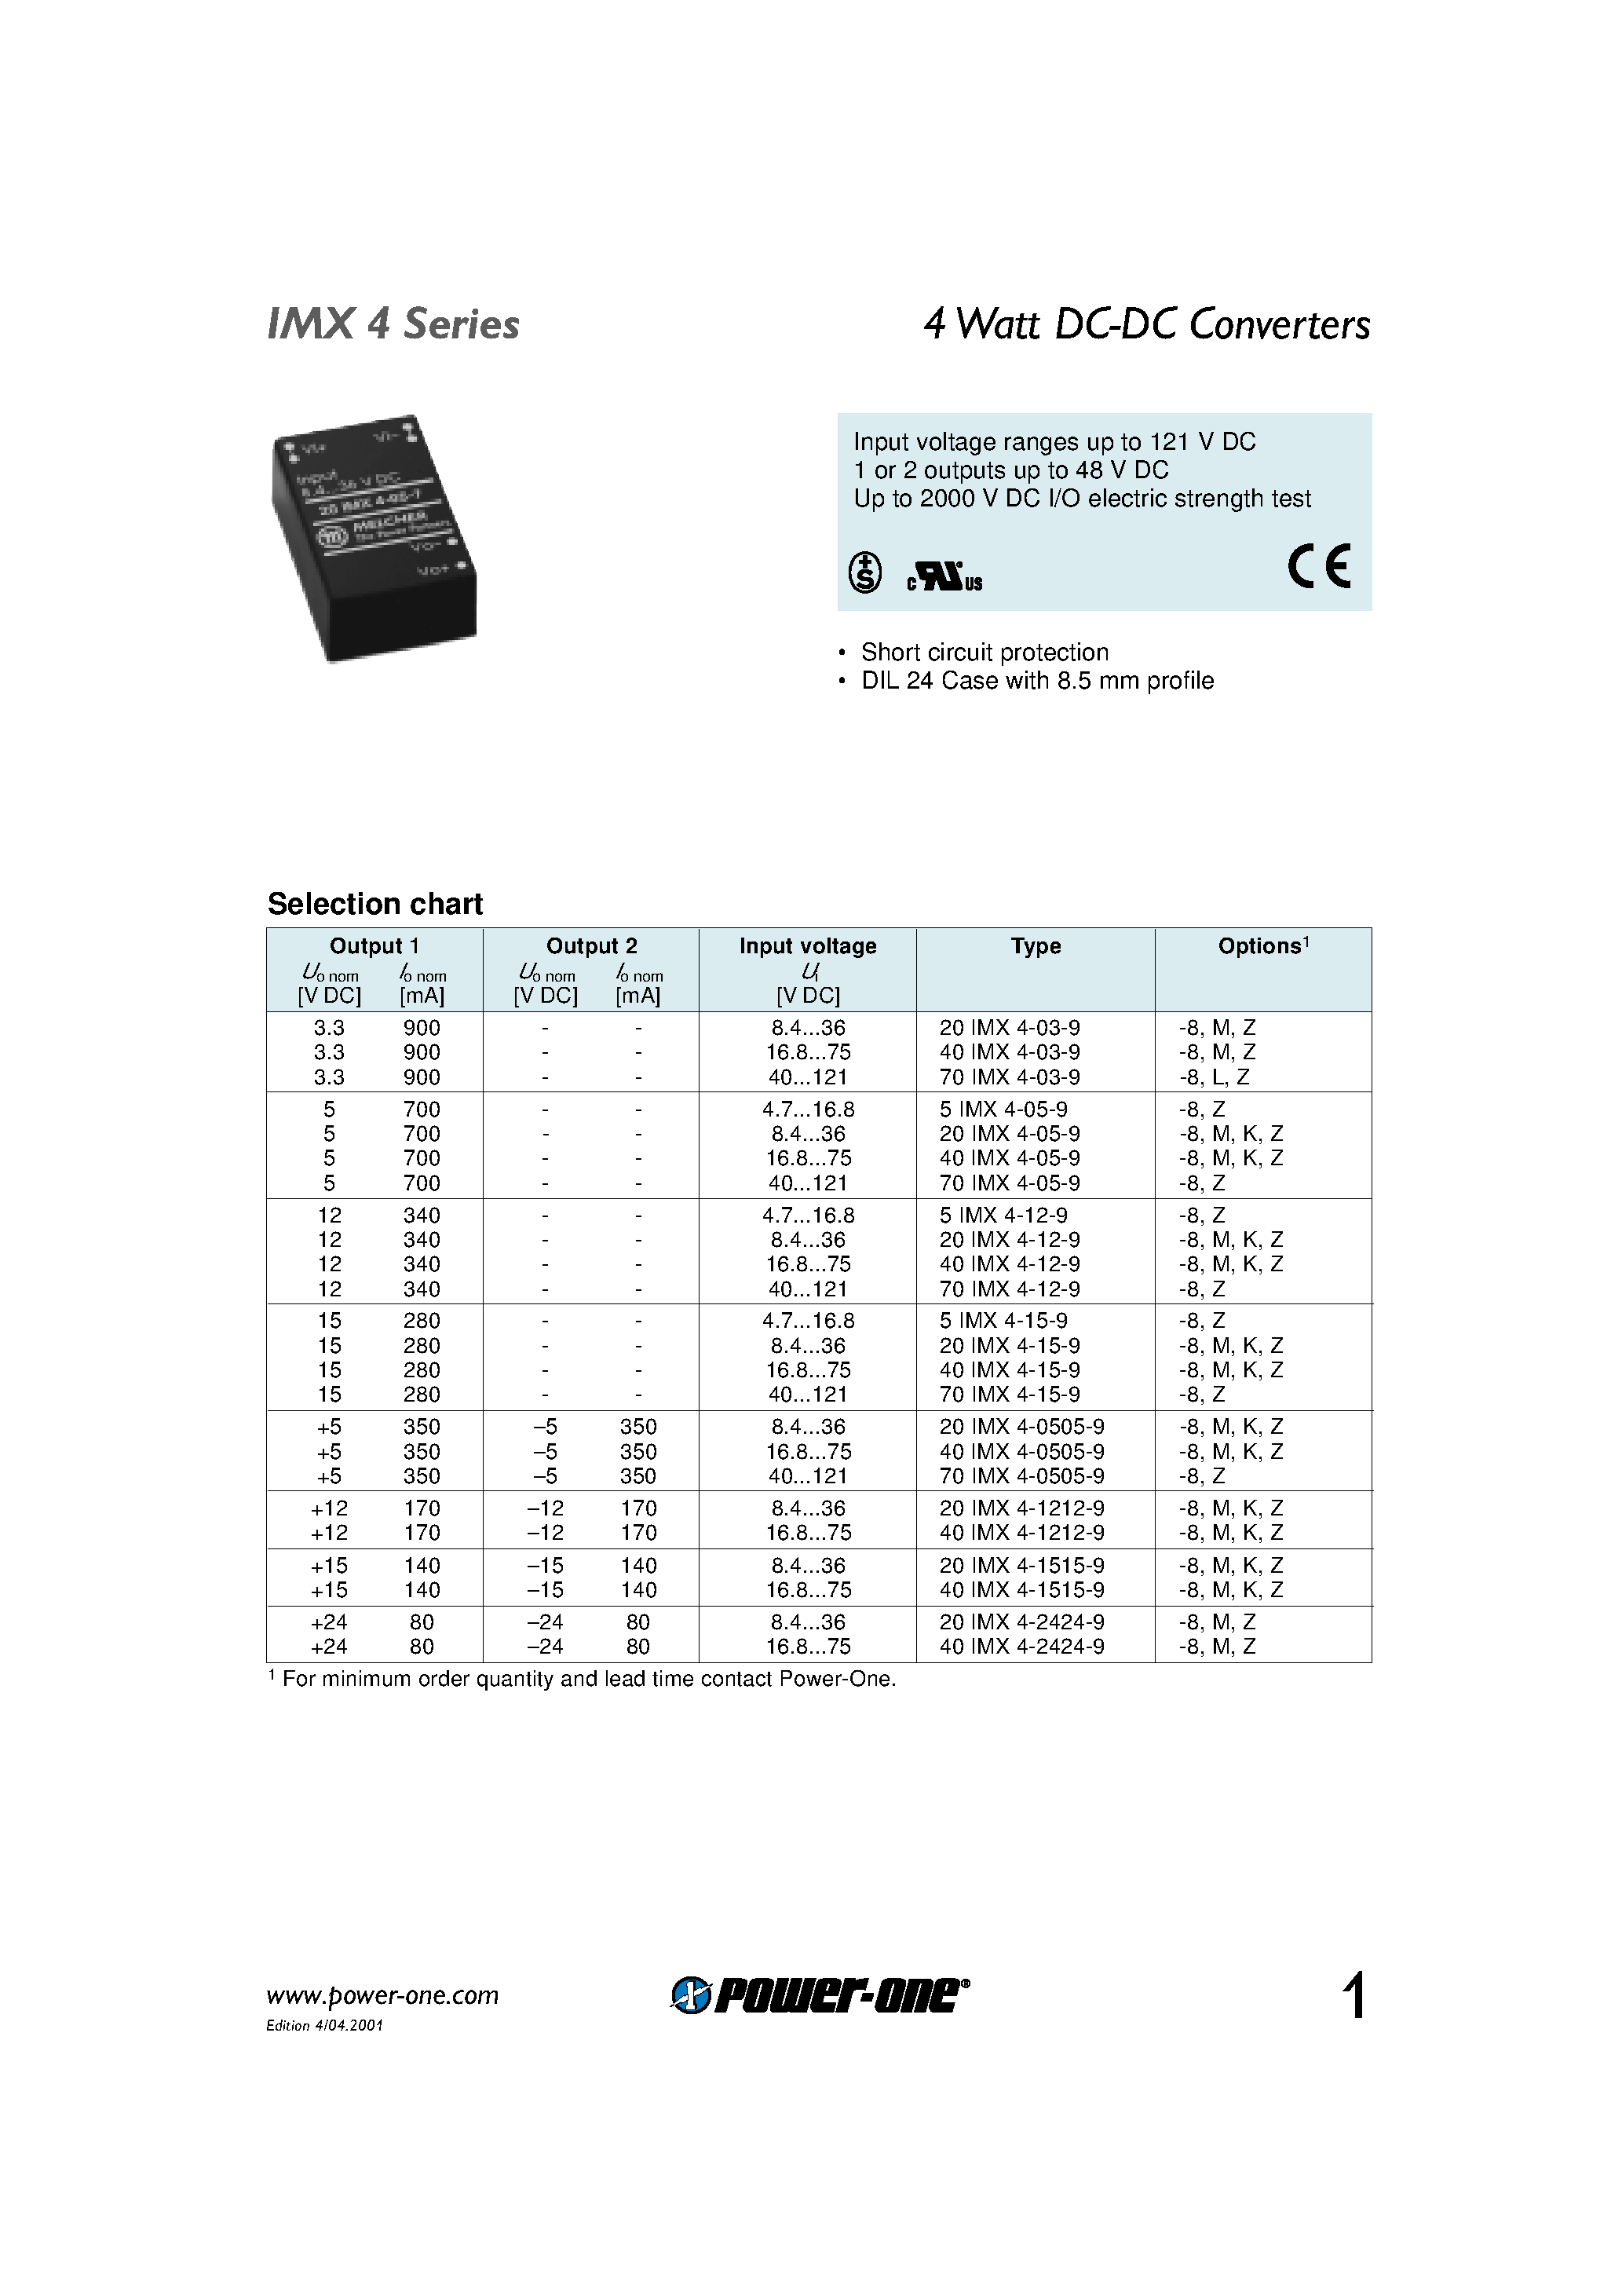 Даташит 40IMX4-12-9 - 4 Watt DC-DC Converters страница 1